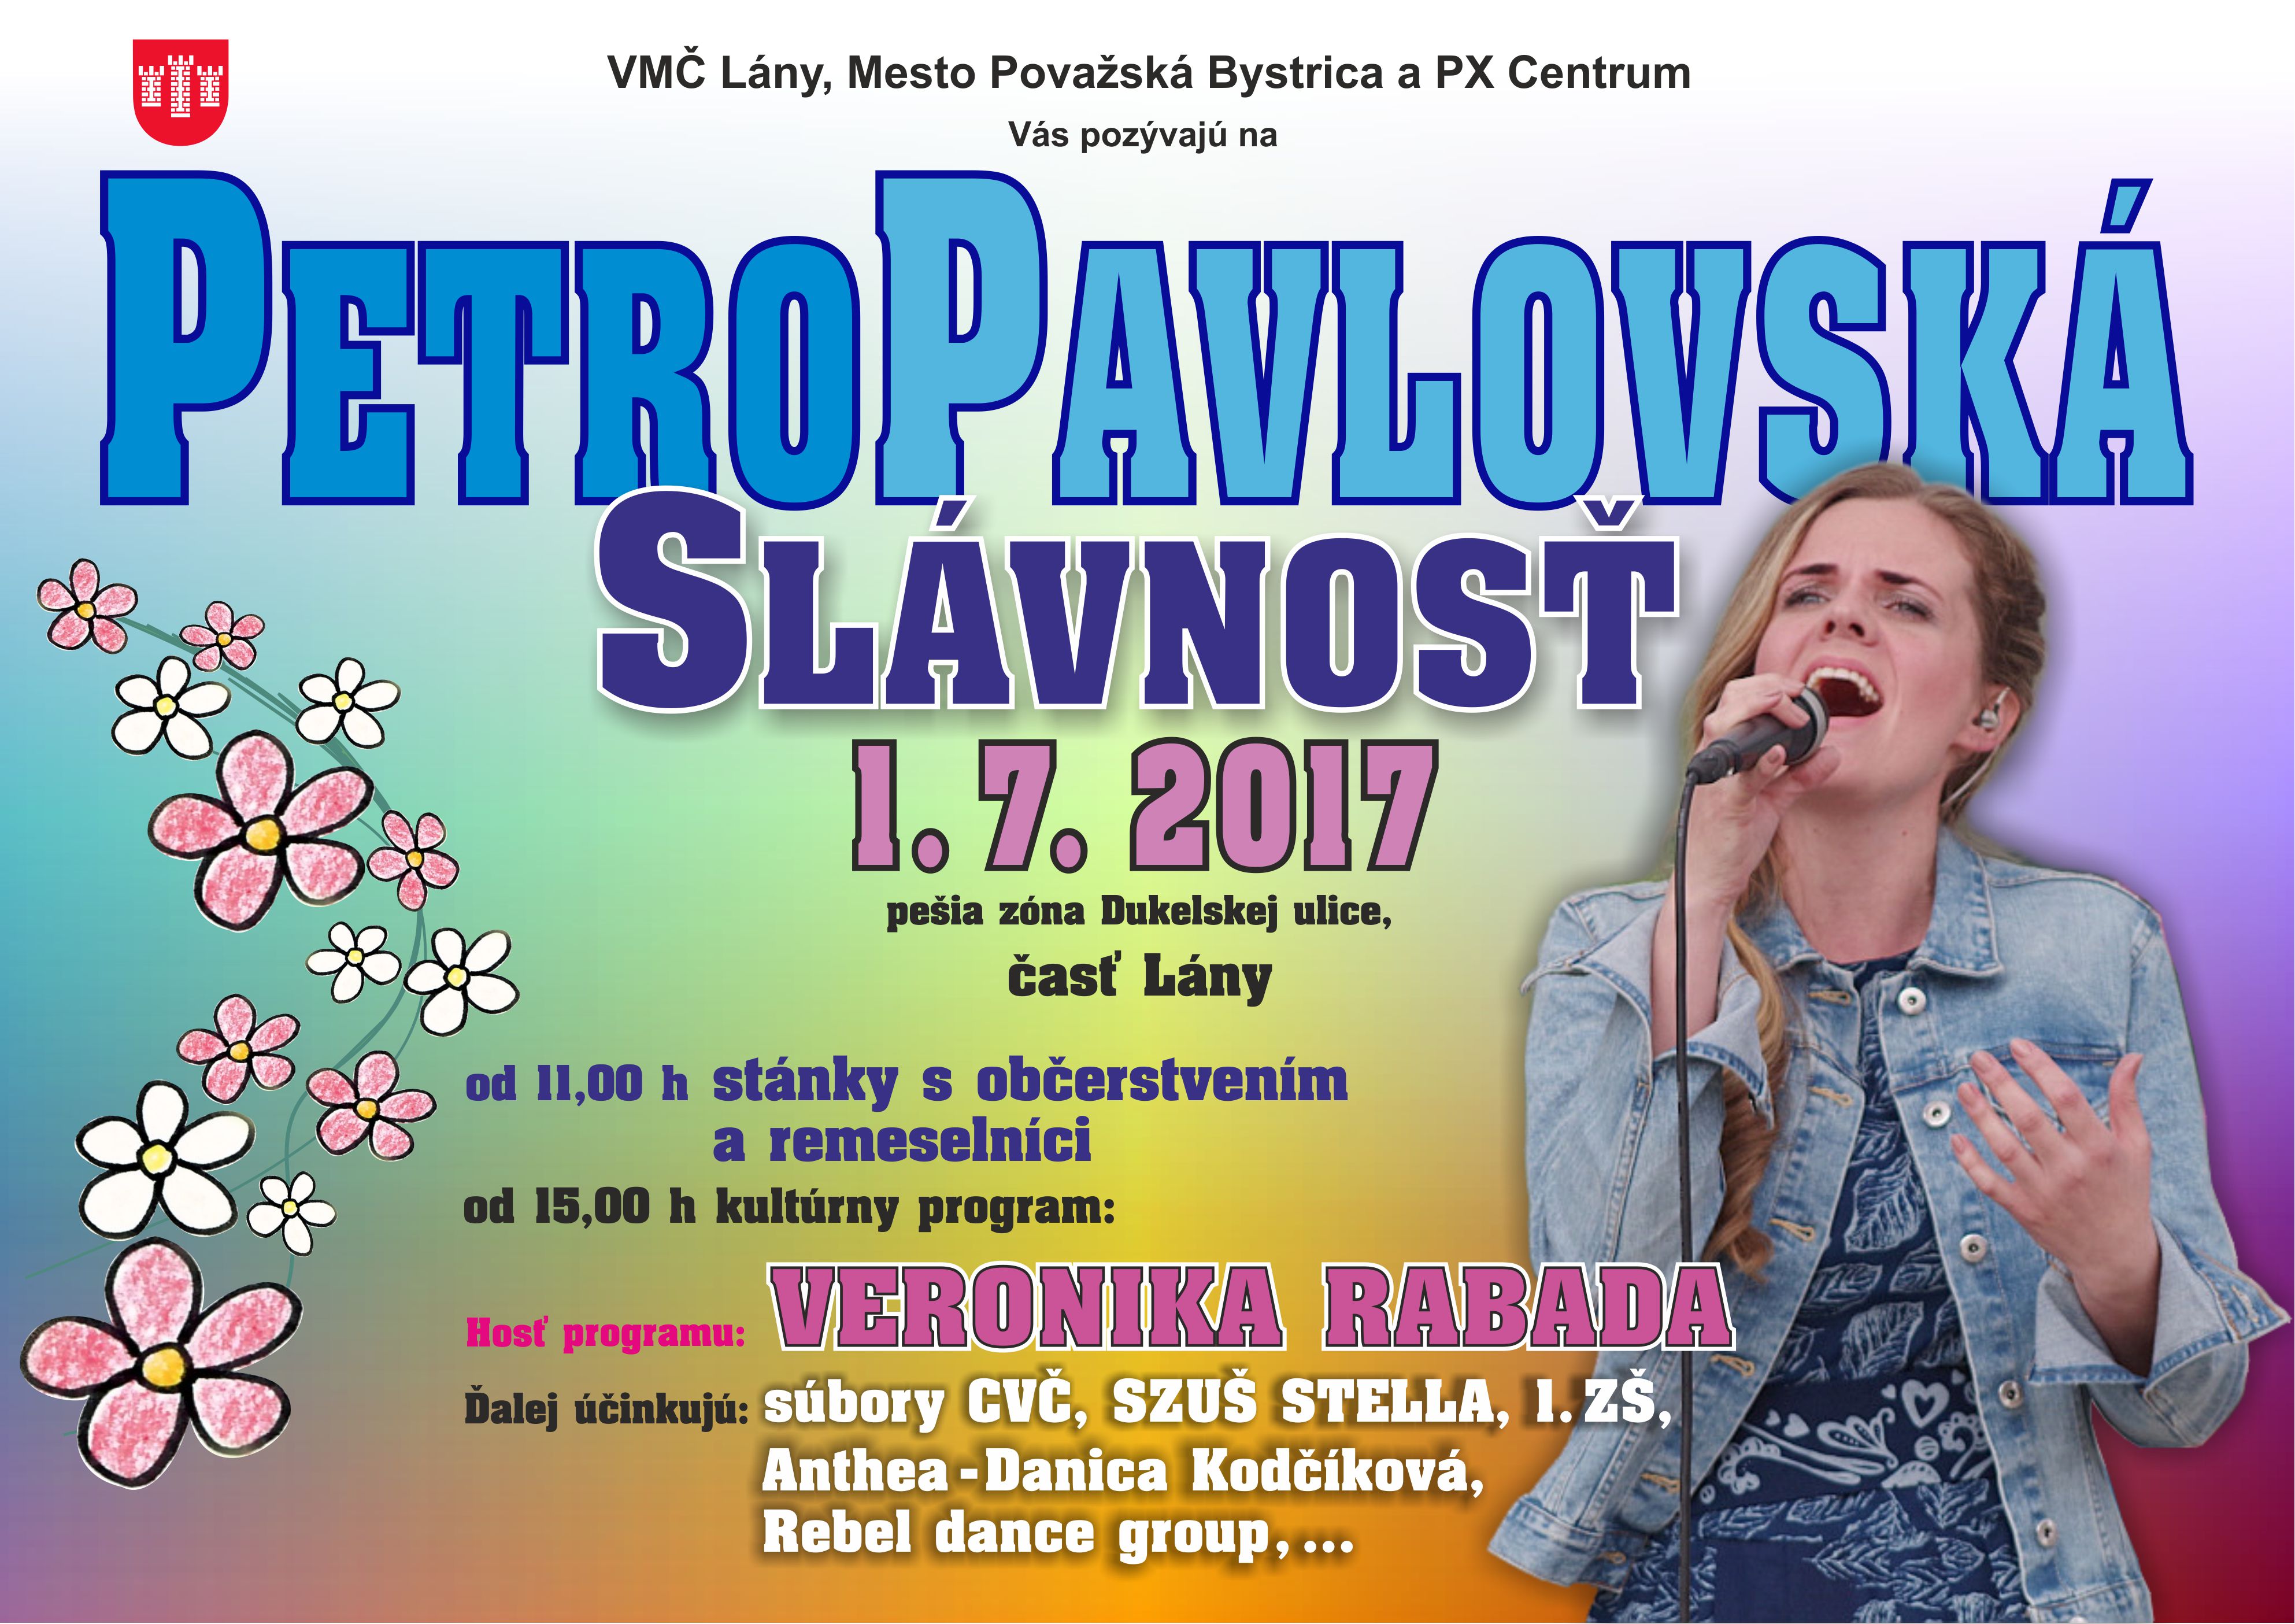 Petro-Pavlovsk slvnos  Povask Bystrica 2017 - 7. ronk